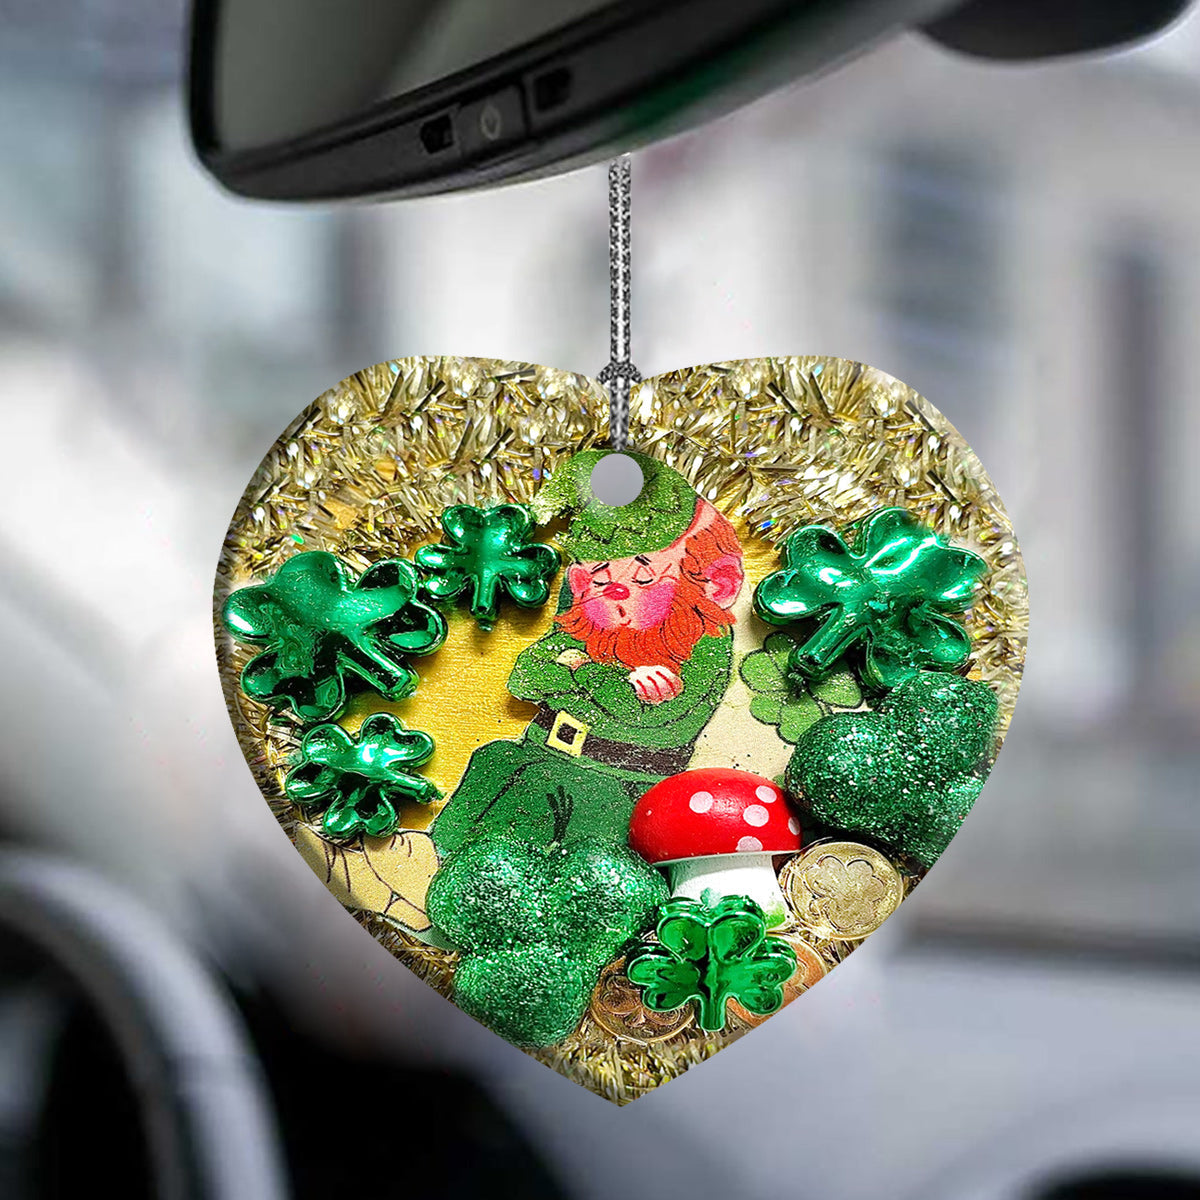 St Patricks Day Marble With Mushroom Heart Ceramic Ornament - Christmas Ornament - Christmas Gift